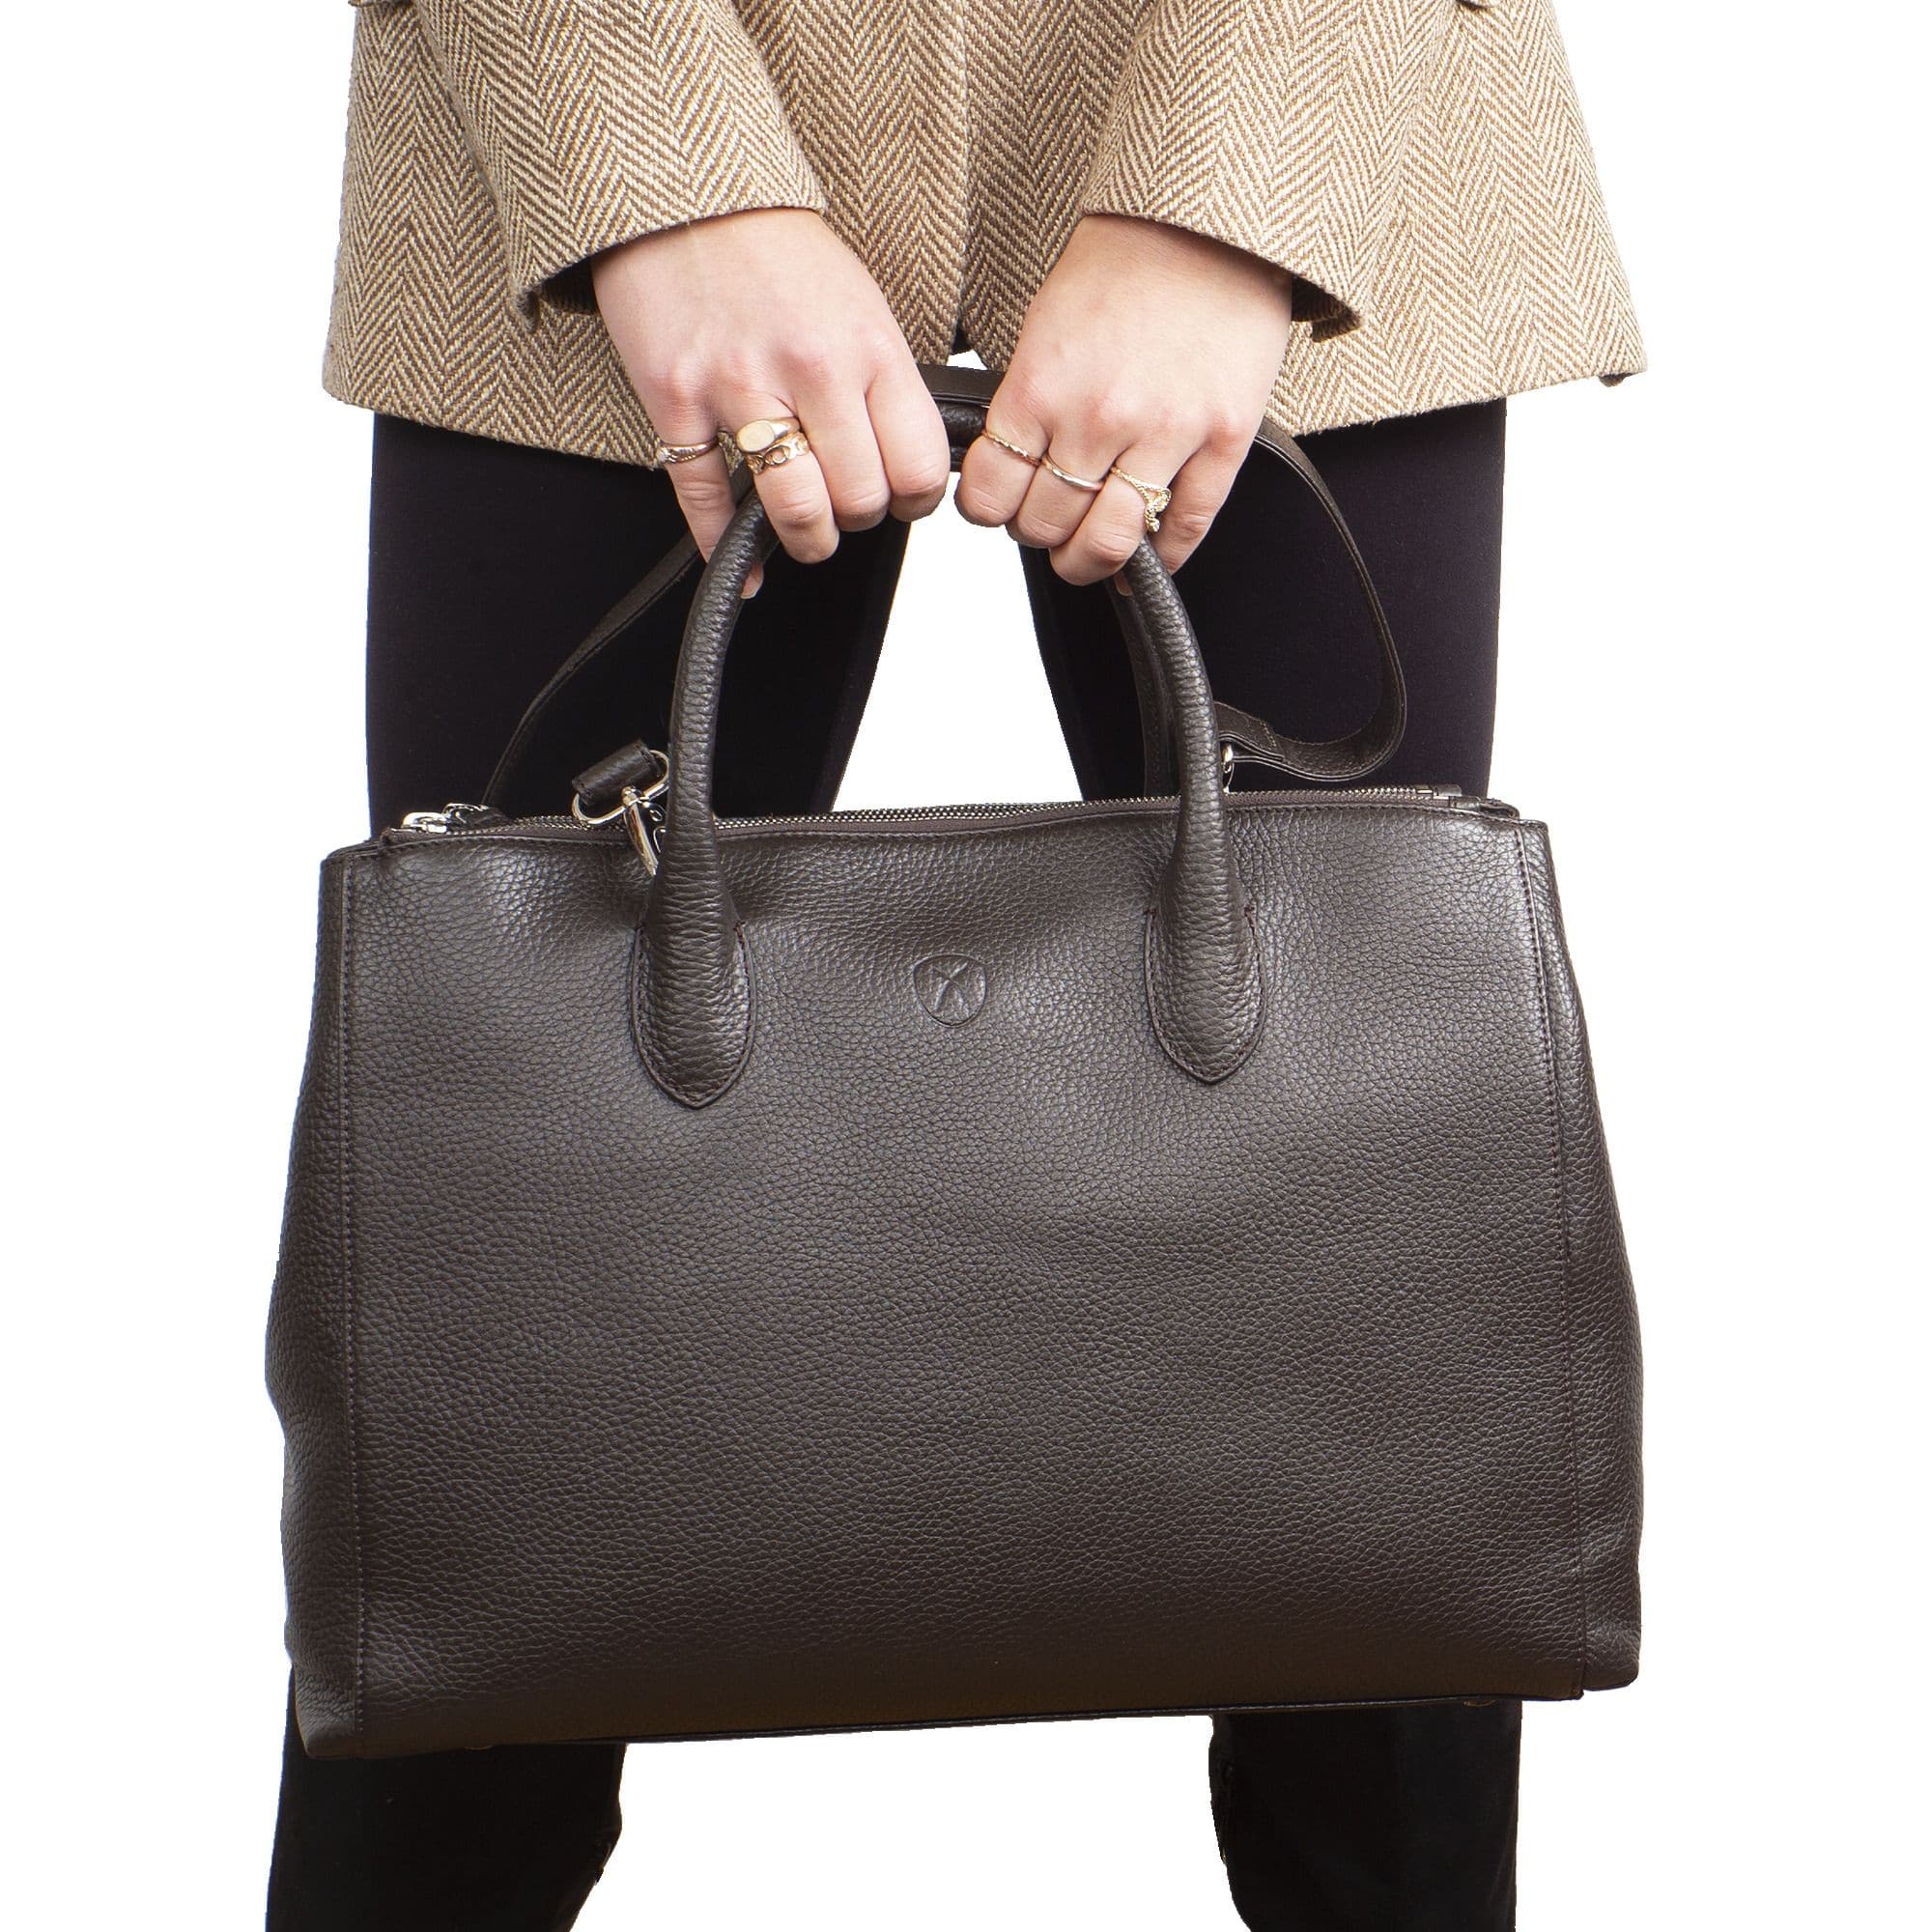 Damen Businesstasche Handtasche 15 Zoll Leder braun